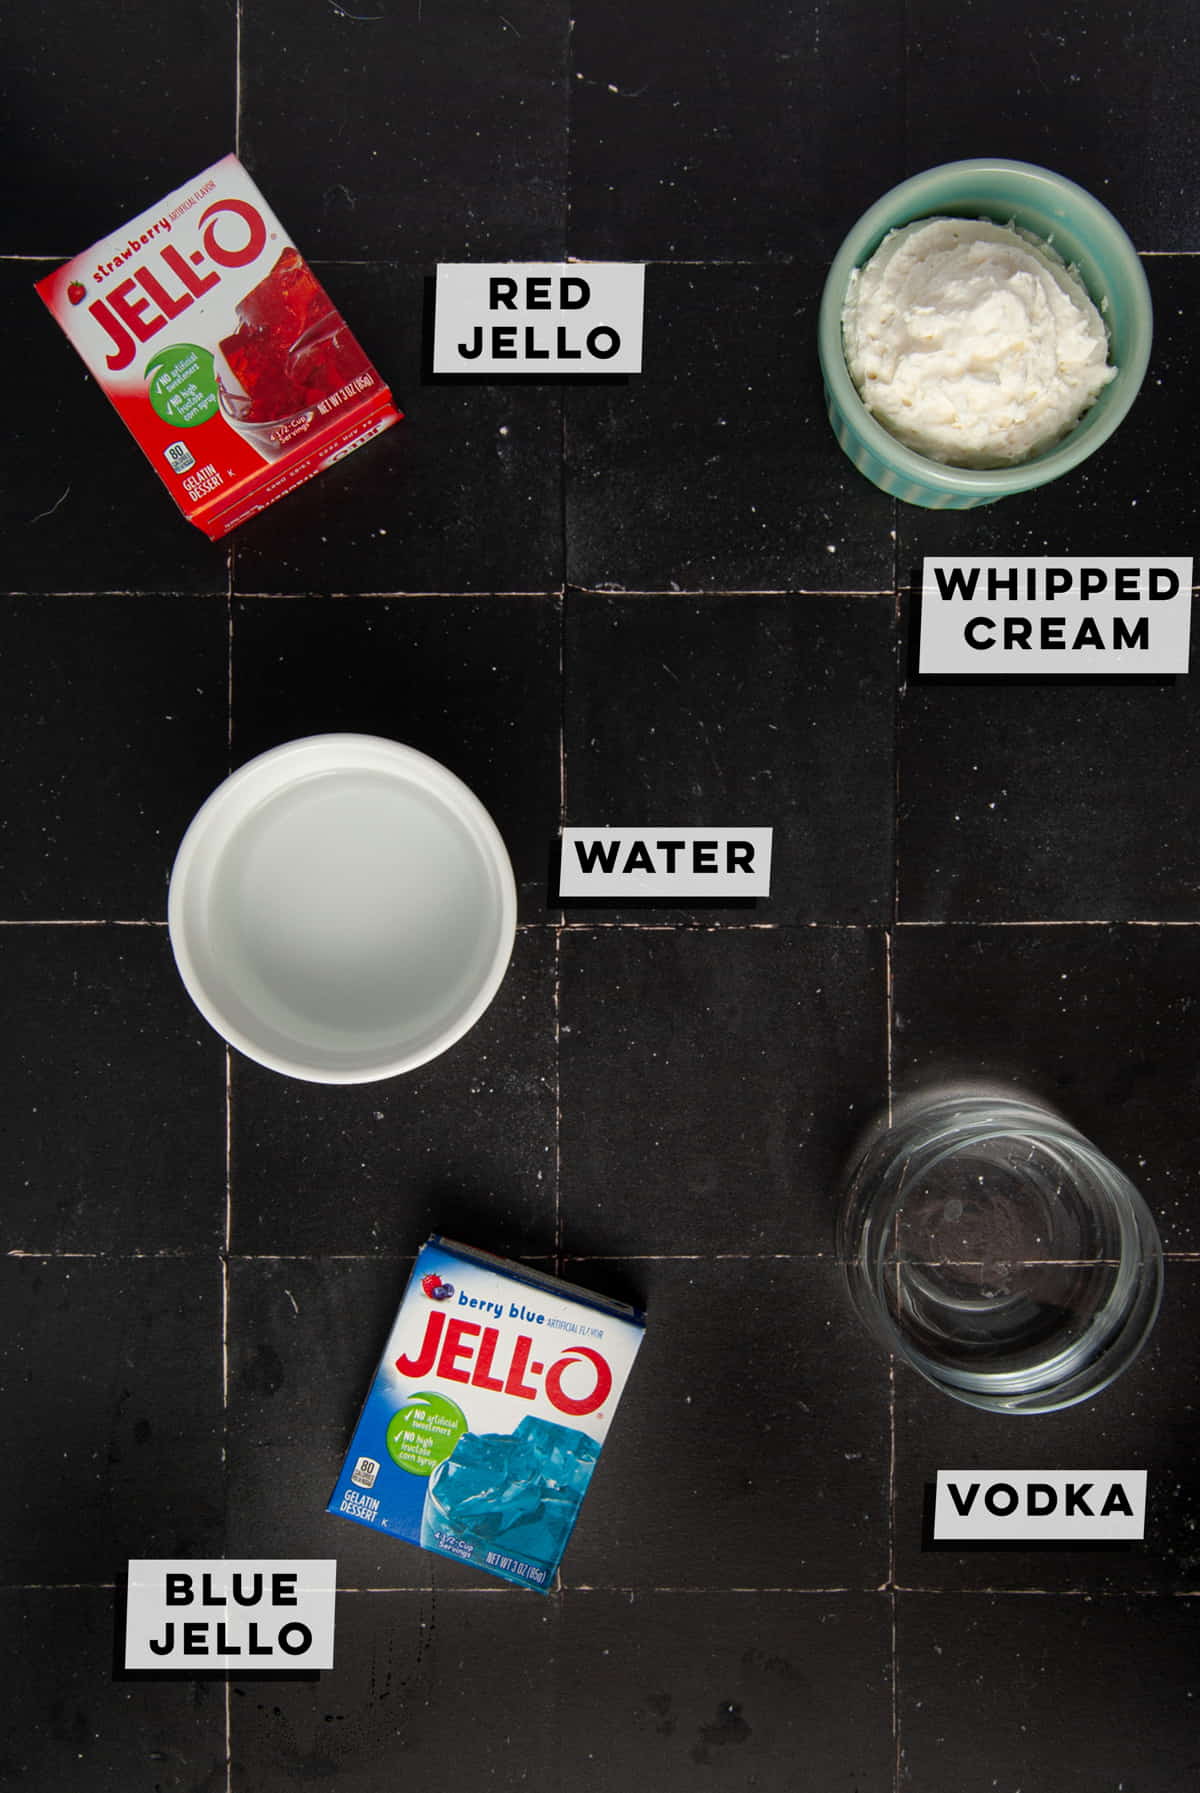 red jello, whipped cream, water, vodka, and blue jello